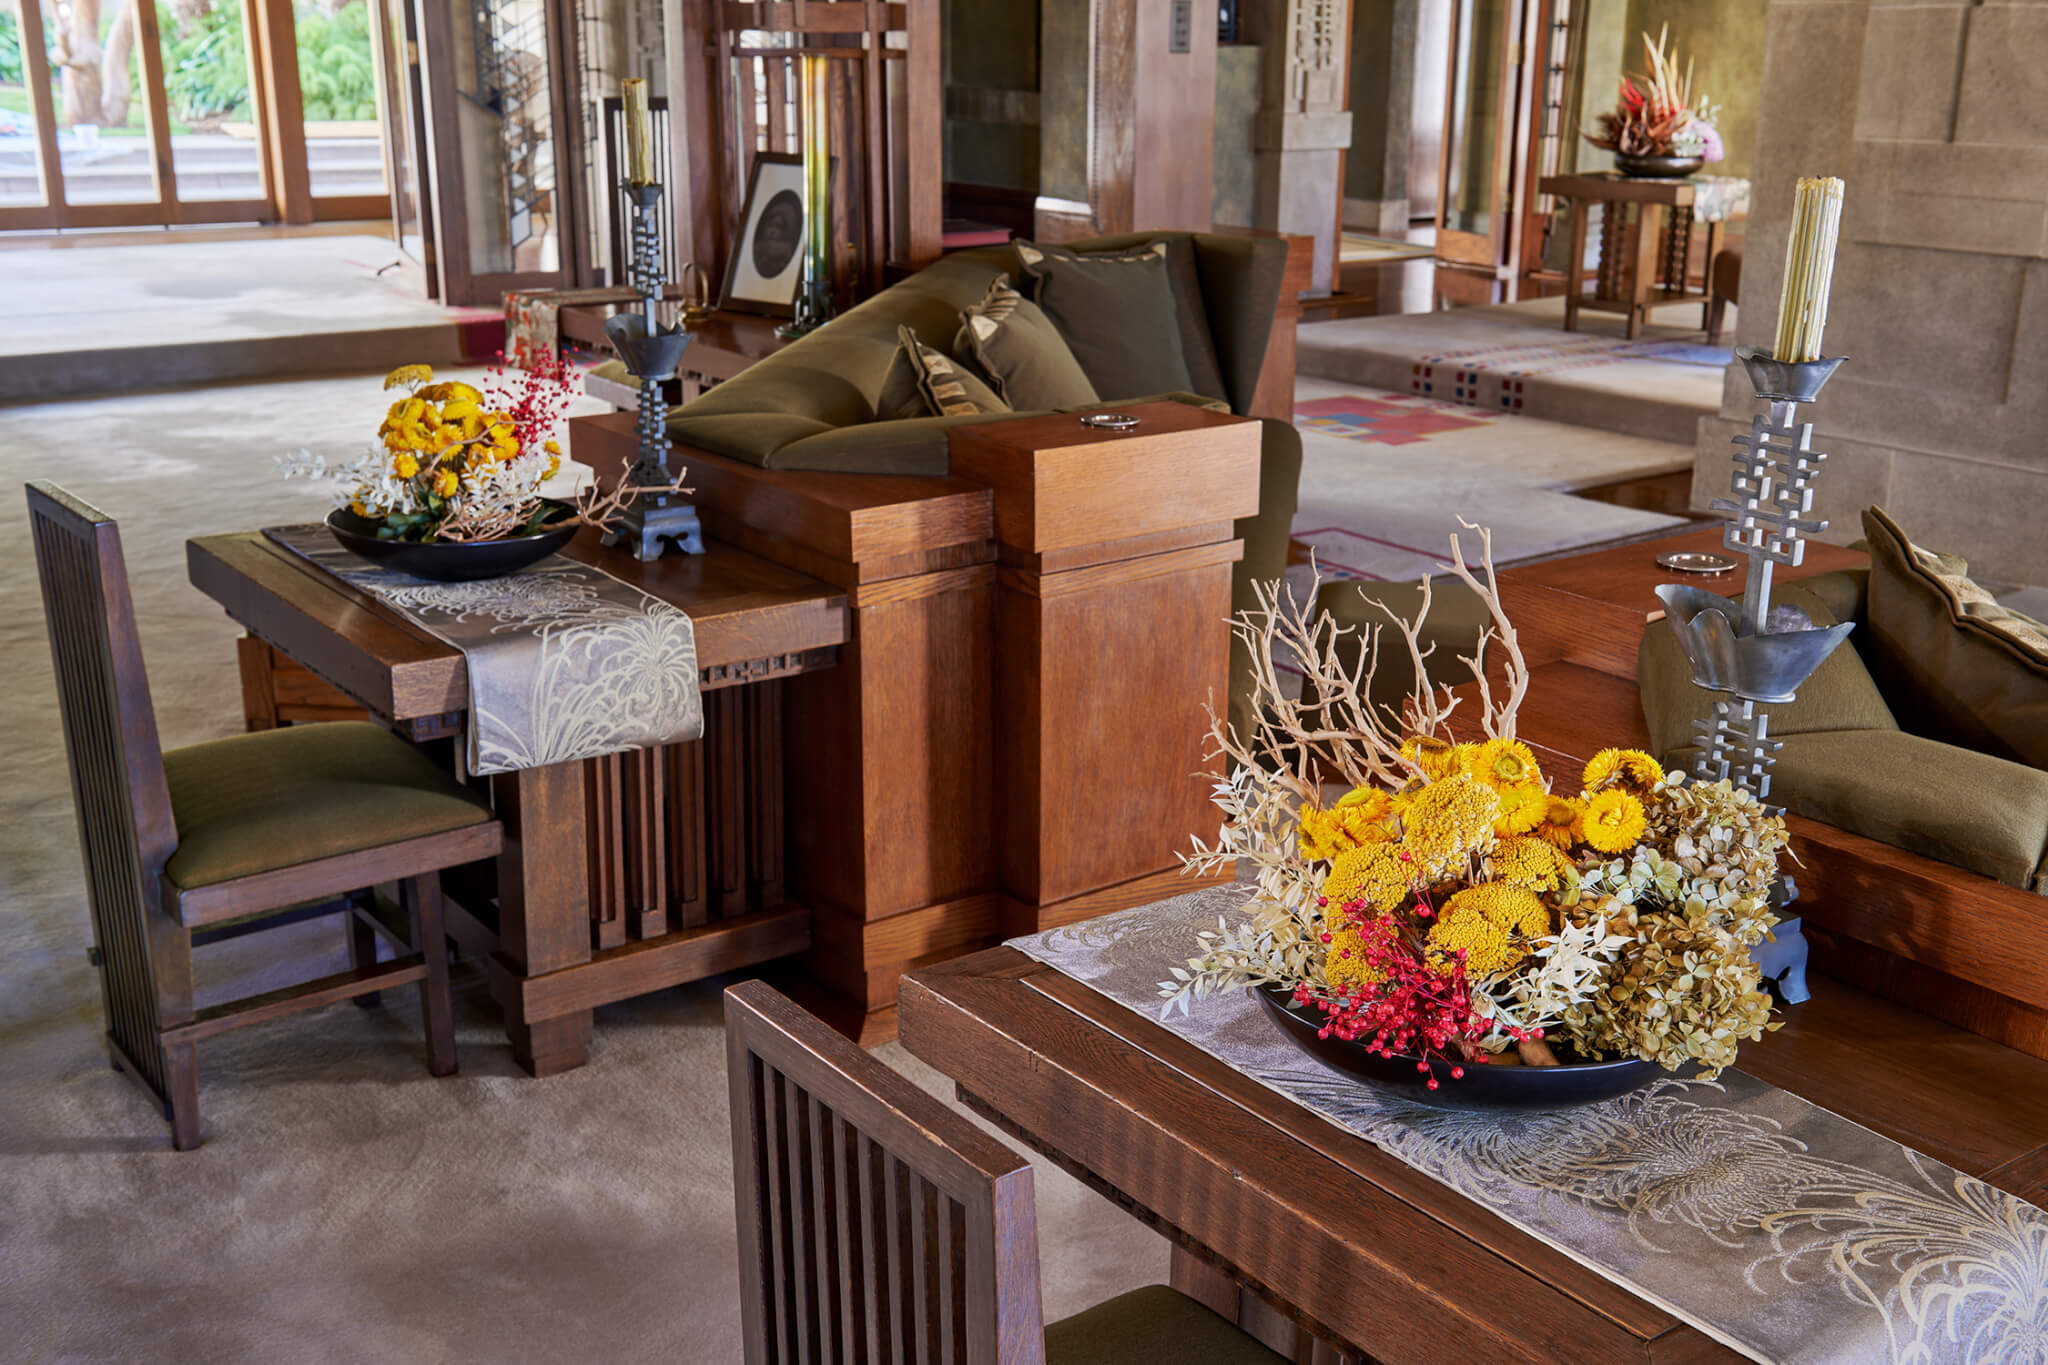 Flower arrangements inside Frank Lloyd Wright’s interiors.